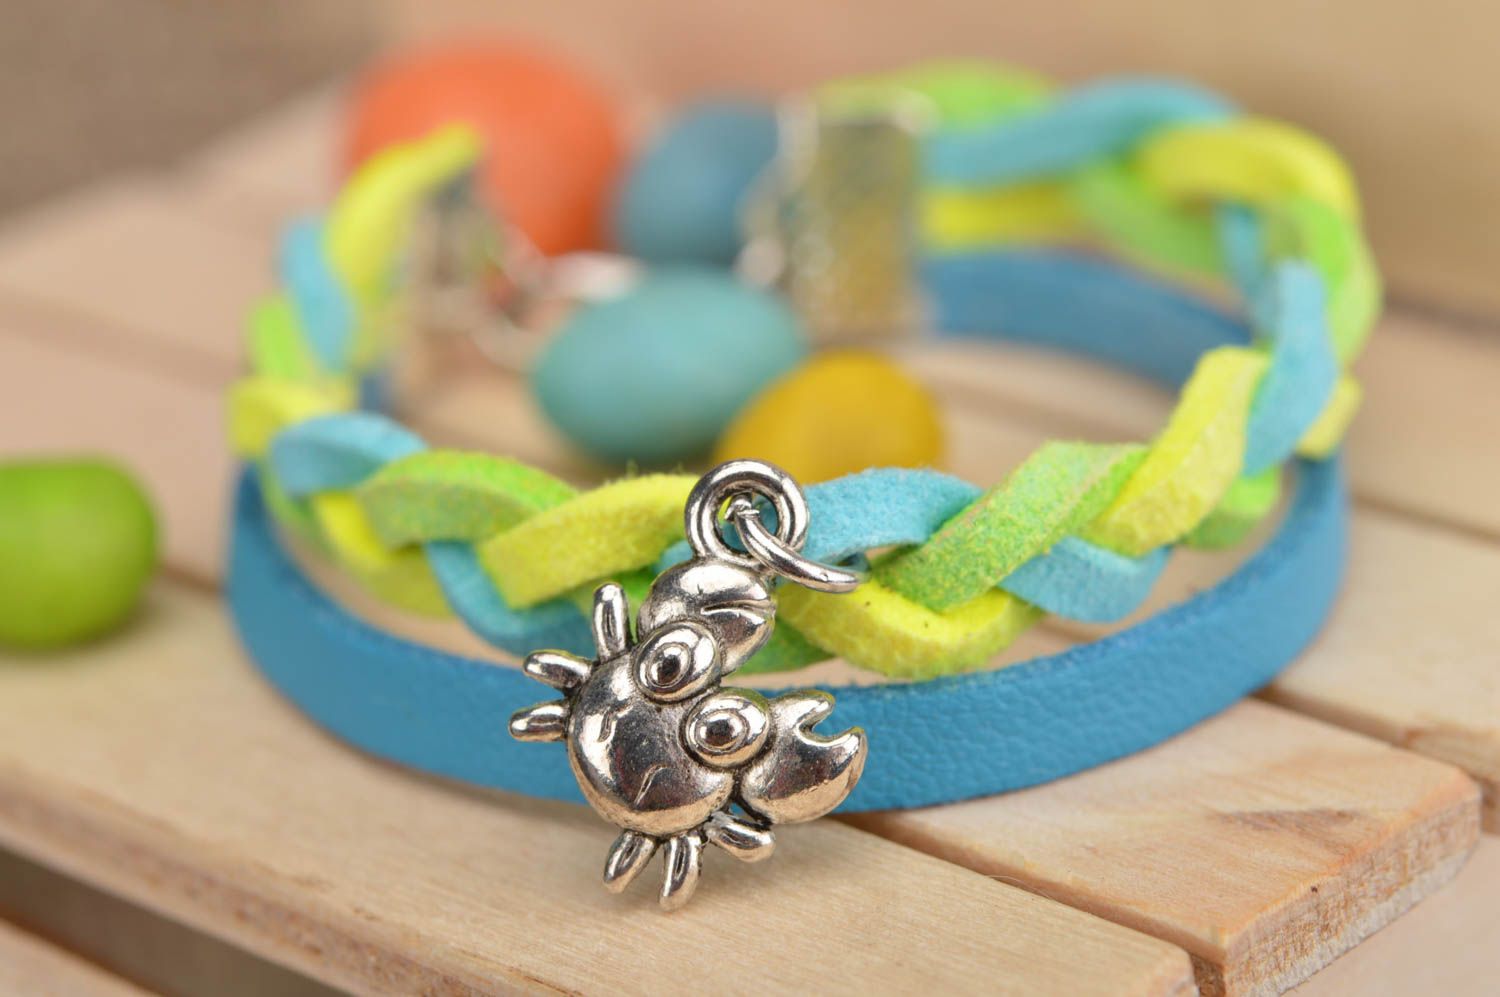 Handmade designer genuine leather cord wrist bracelet blue and yellow with charm photo 1